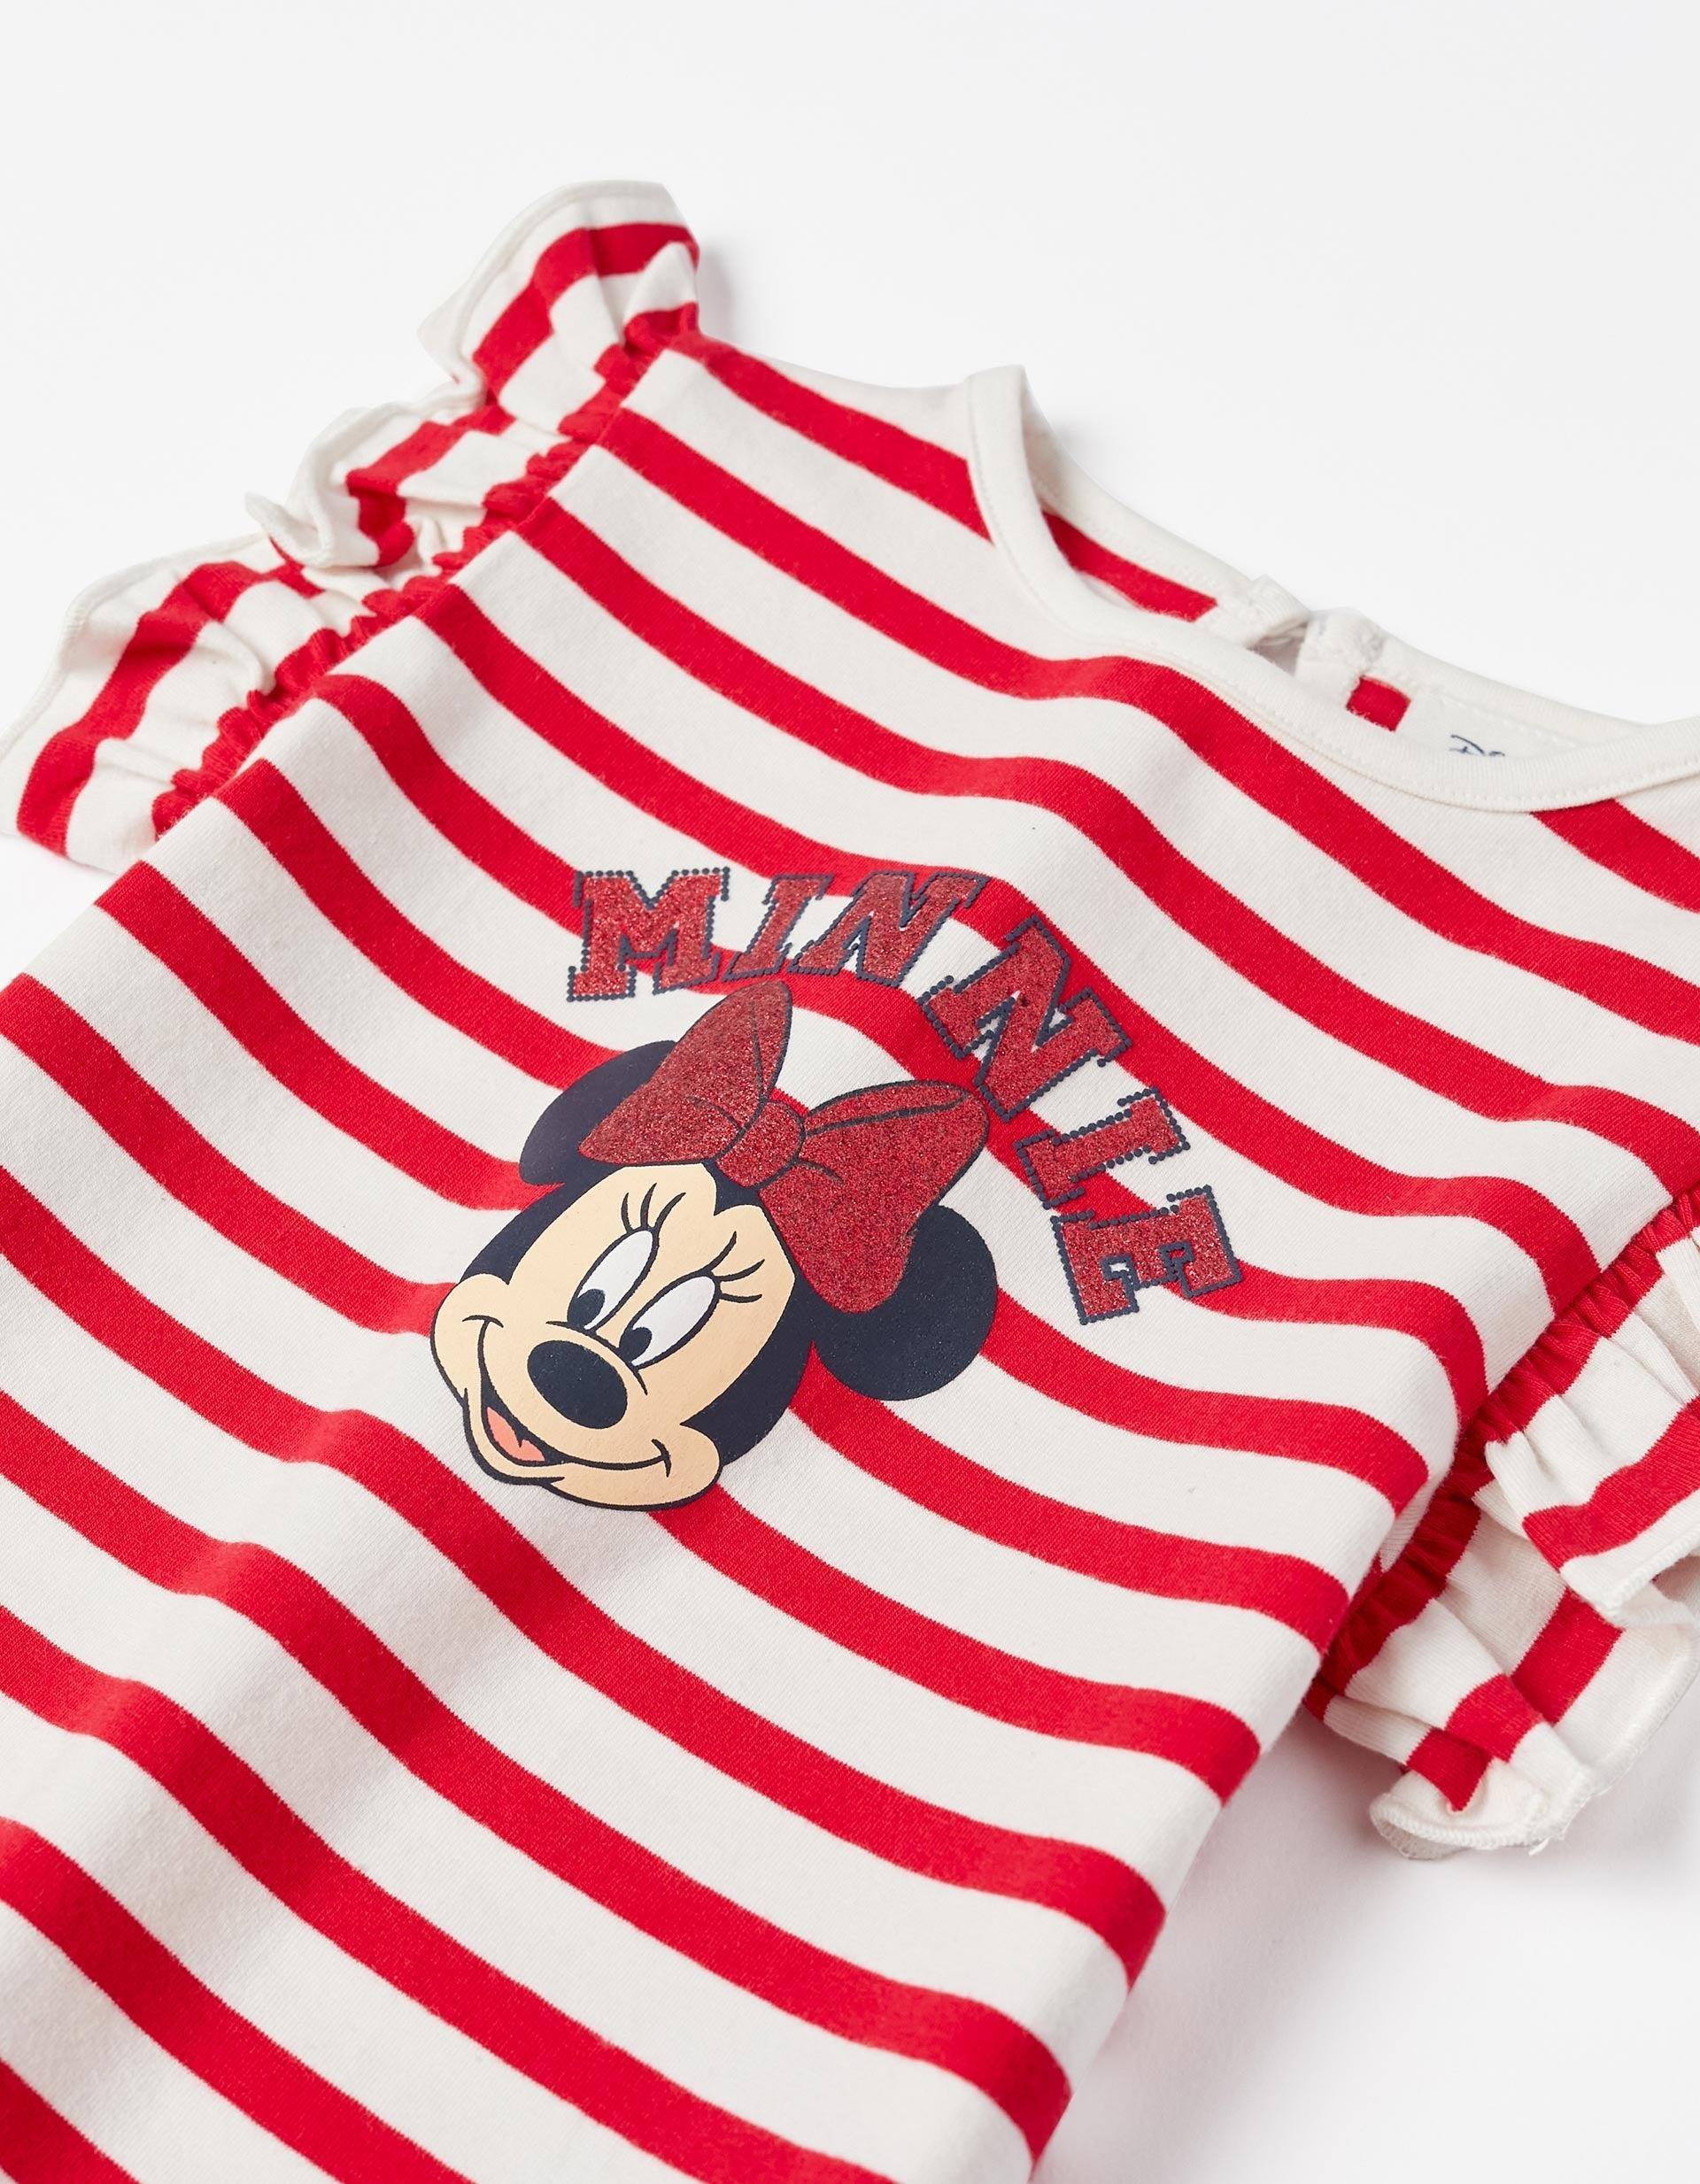 Zippy - Red Striped T-Shirt, Baby Girls